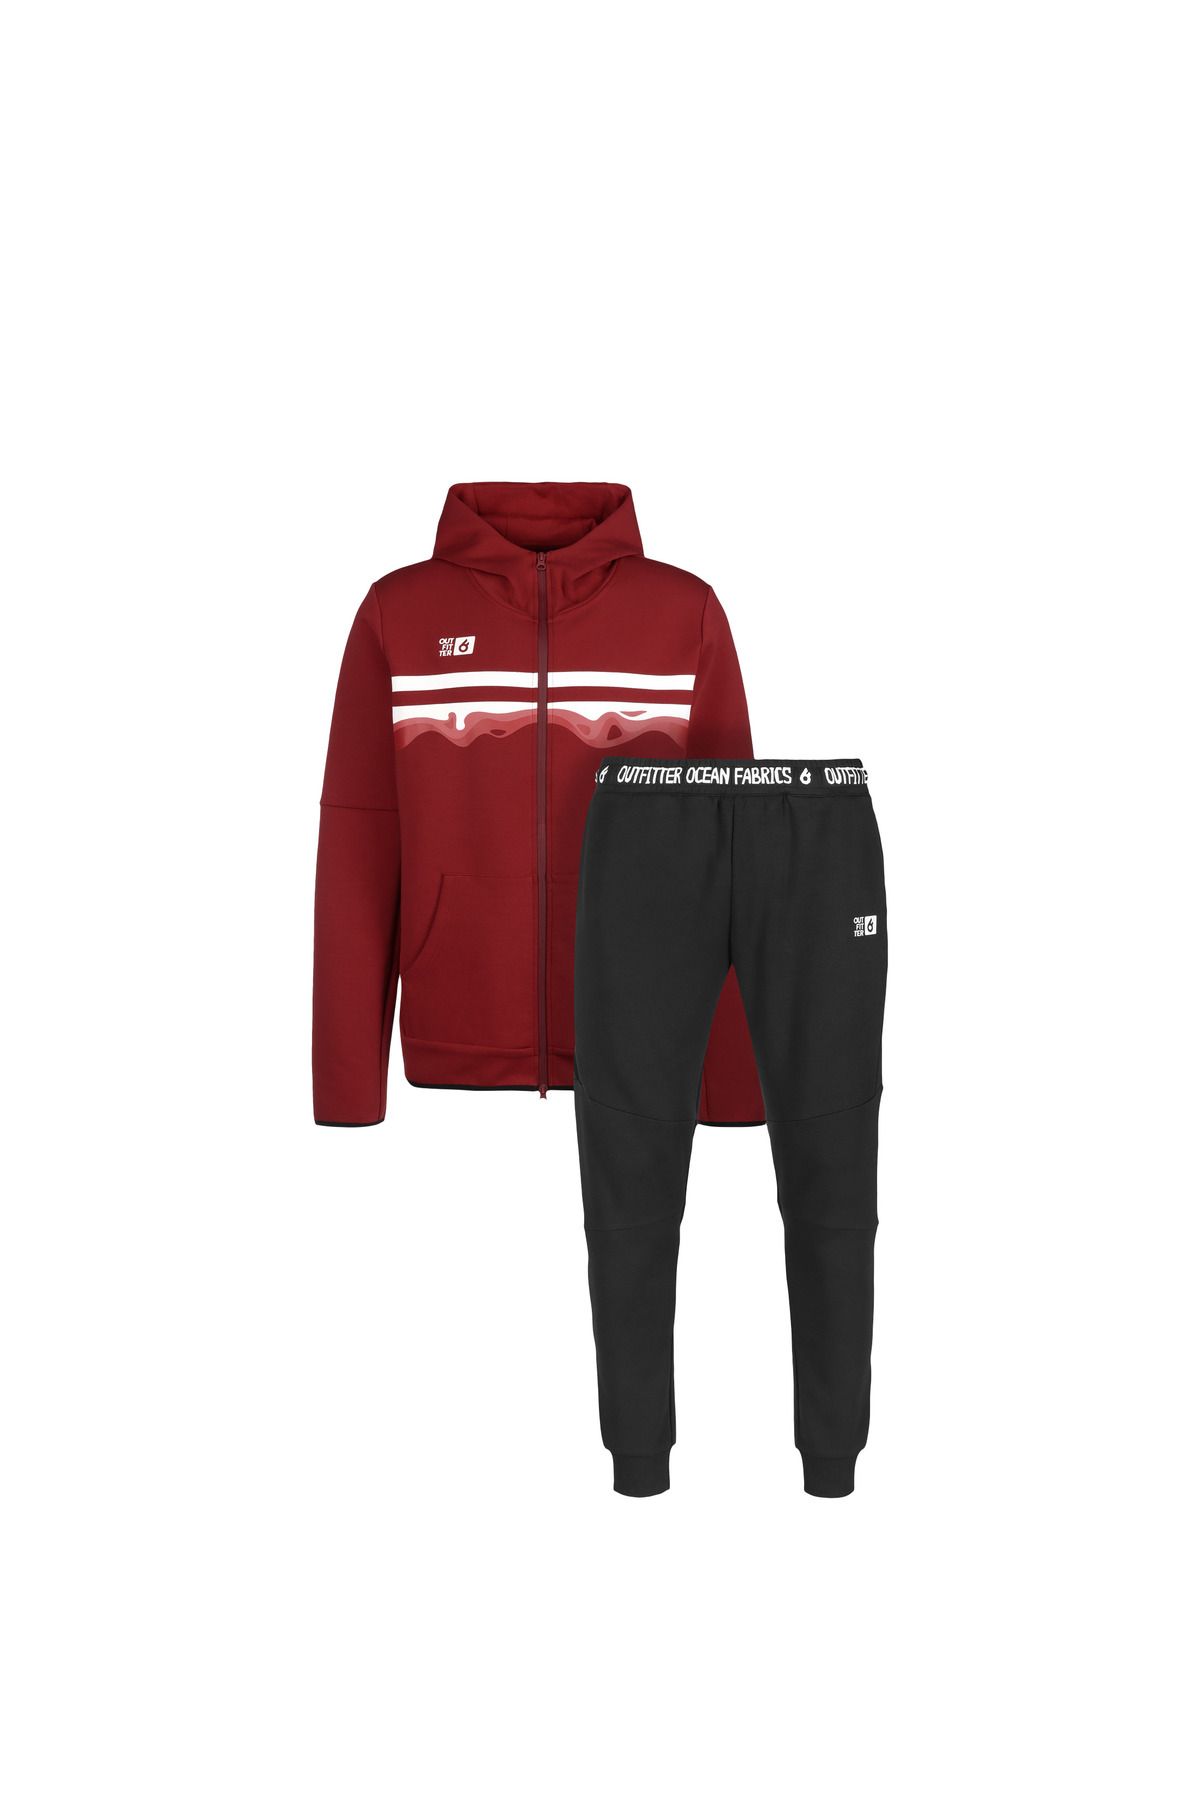 Outfitter Trainingsanzug - Rot - Regular Trendyol - Fit